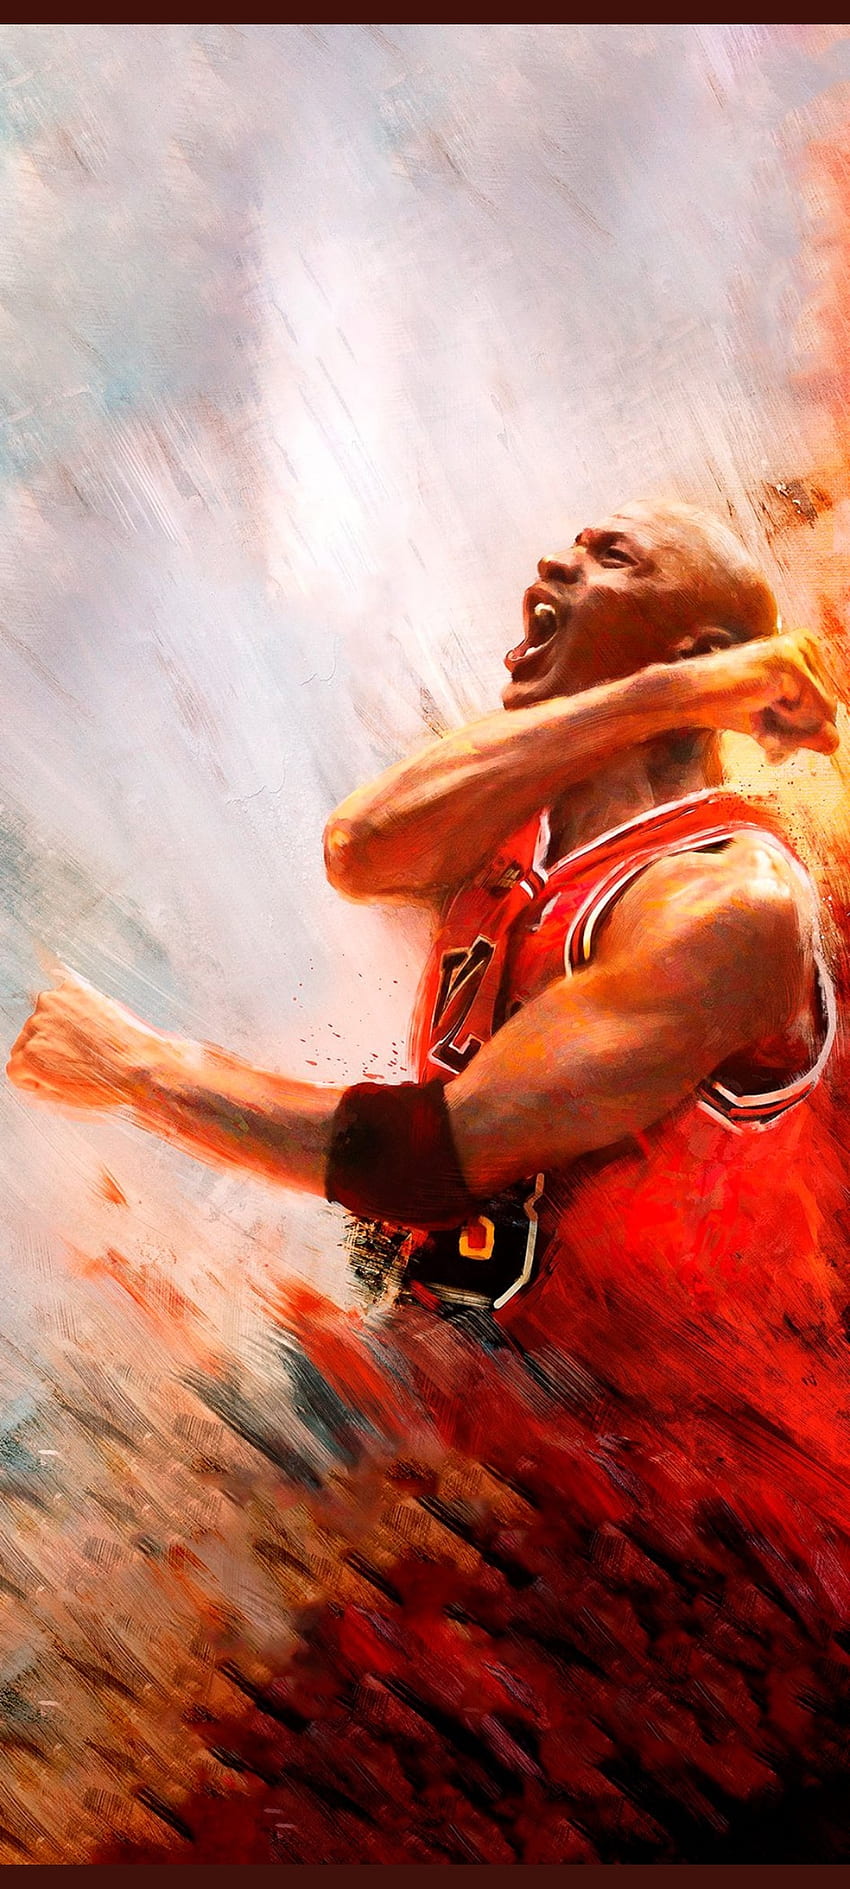 Michael Jordan 23, 23, bola basket, banteng, nba, chicago wallpaper ponsel HD